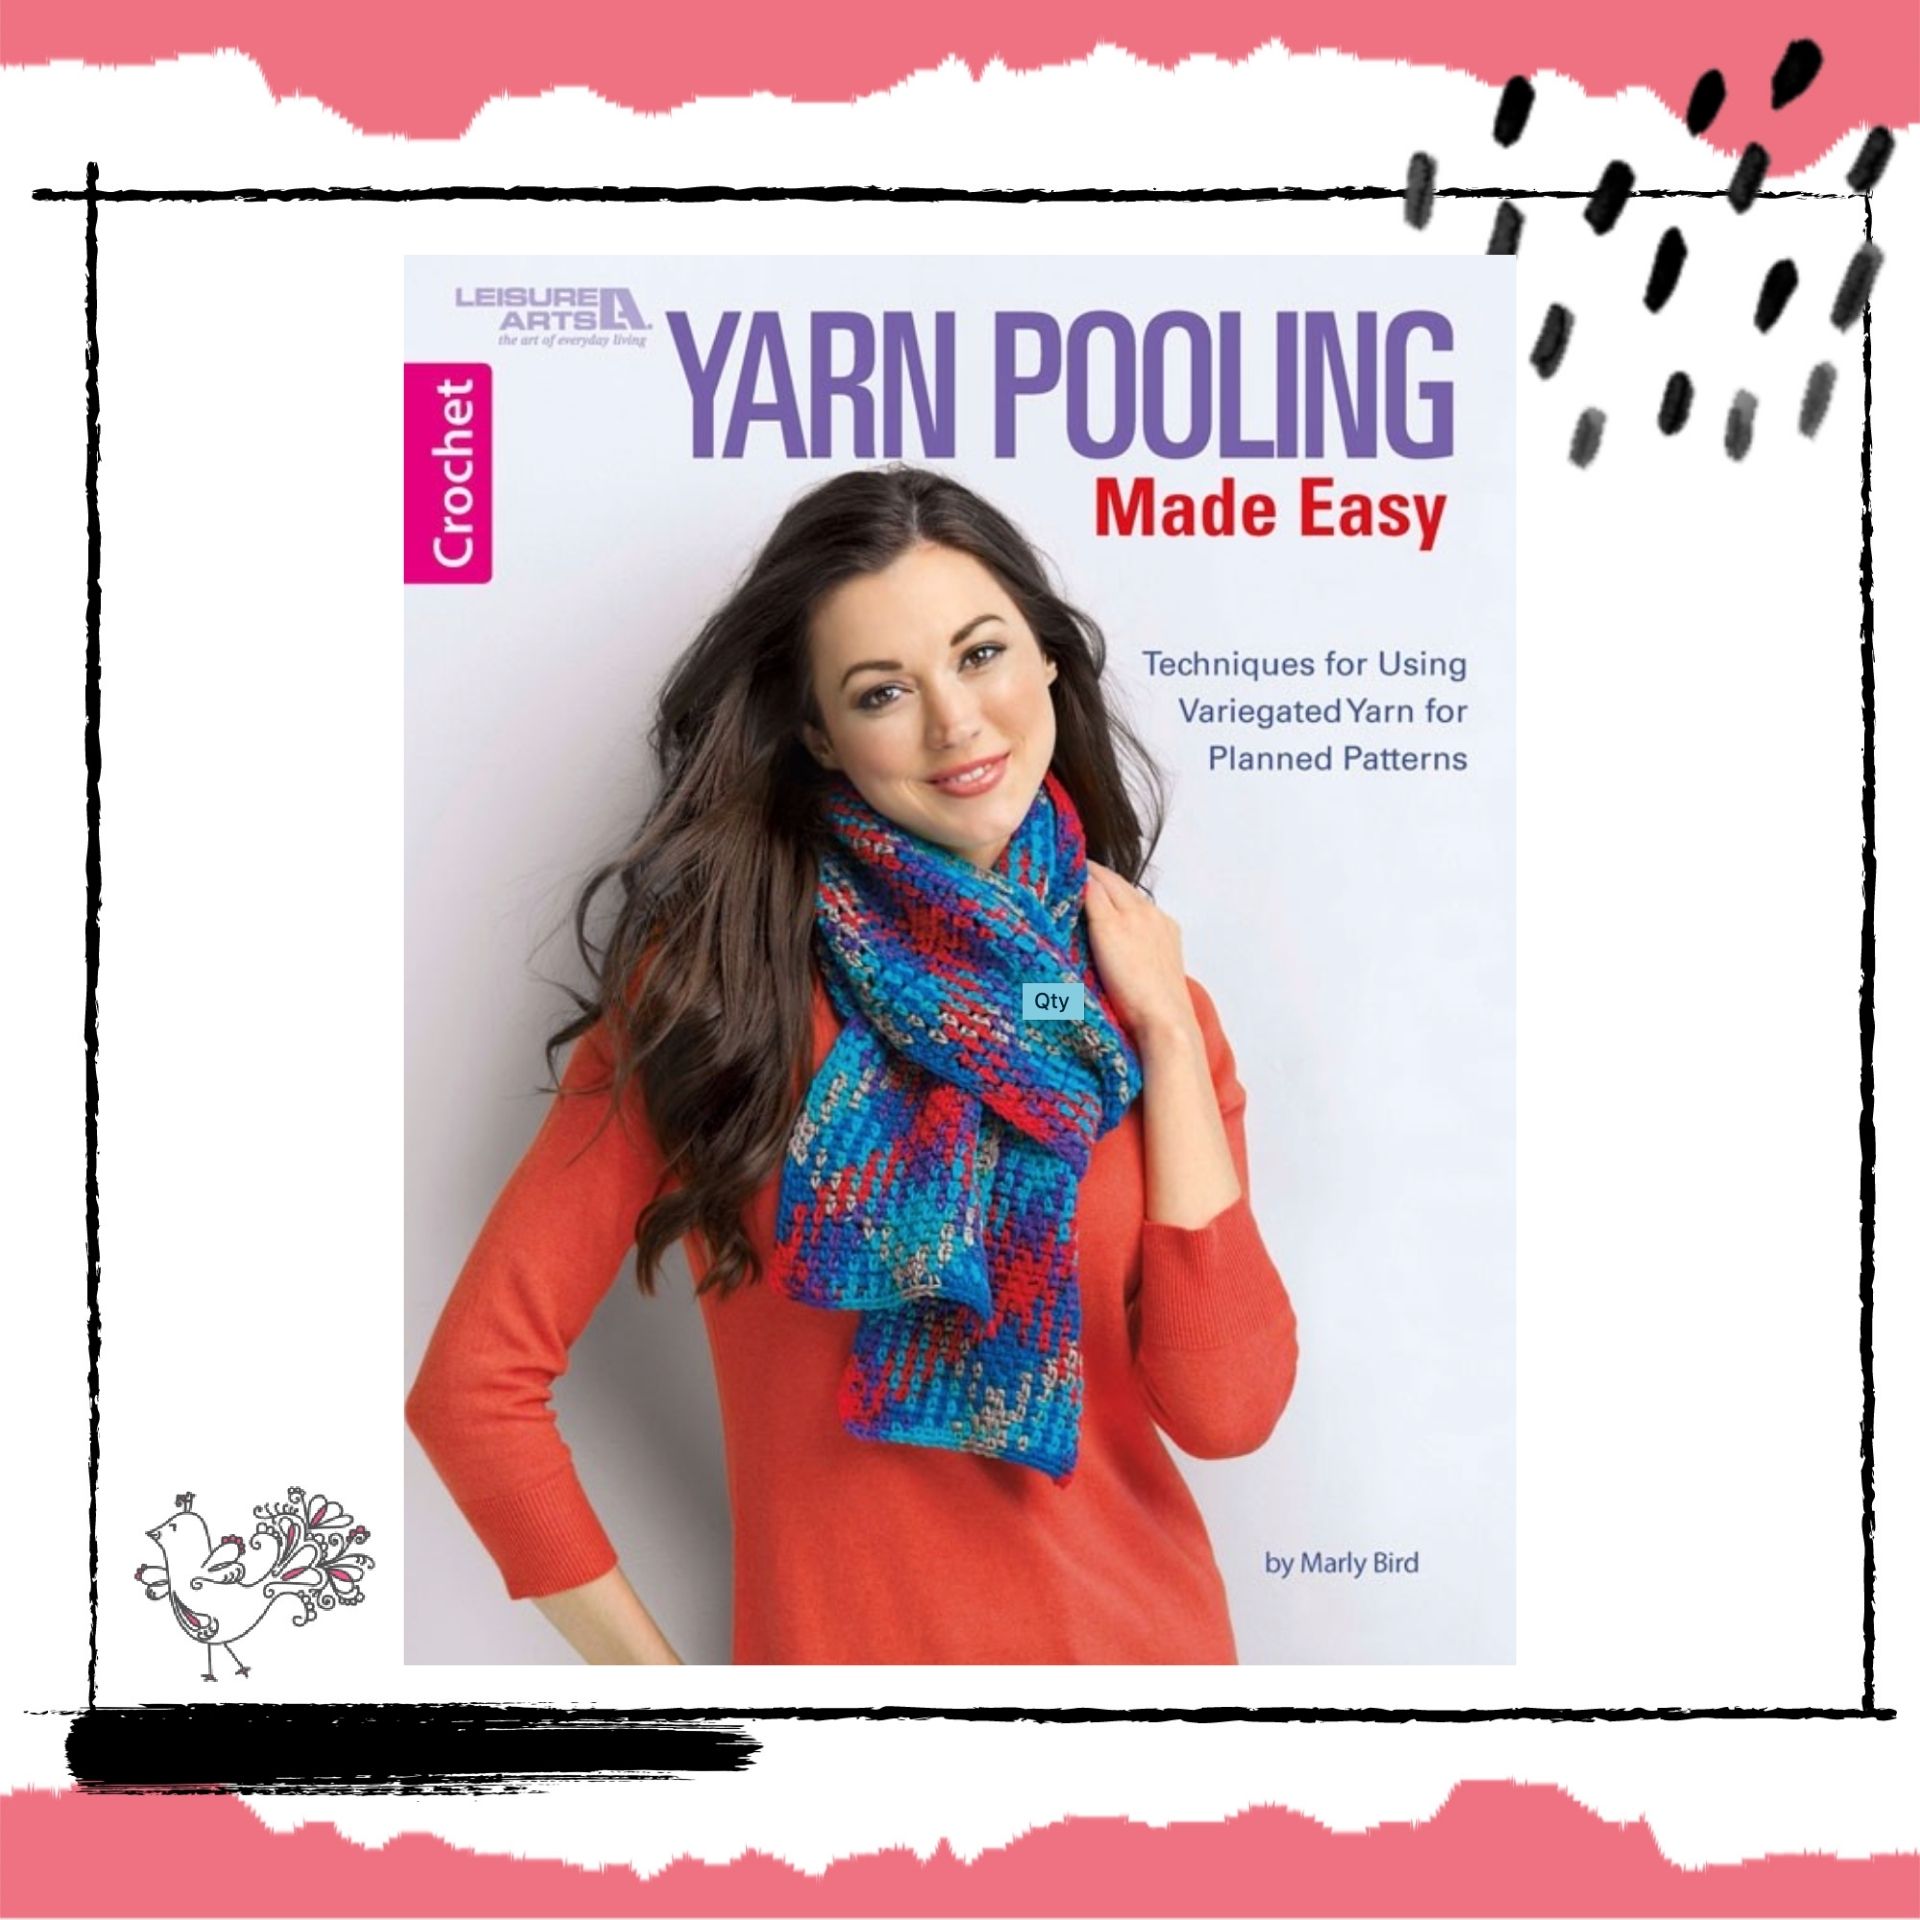 Simply Socks Yarn Co. Blog: Assigned Pooling Yarns & Pattern Ideas